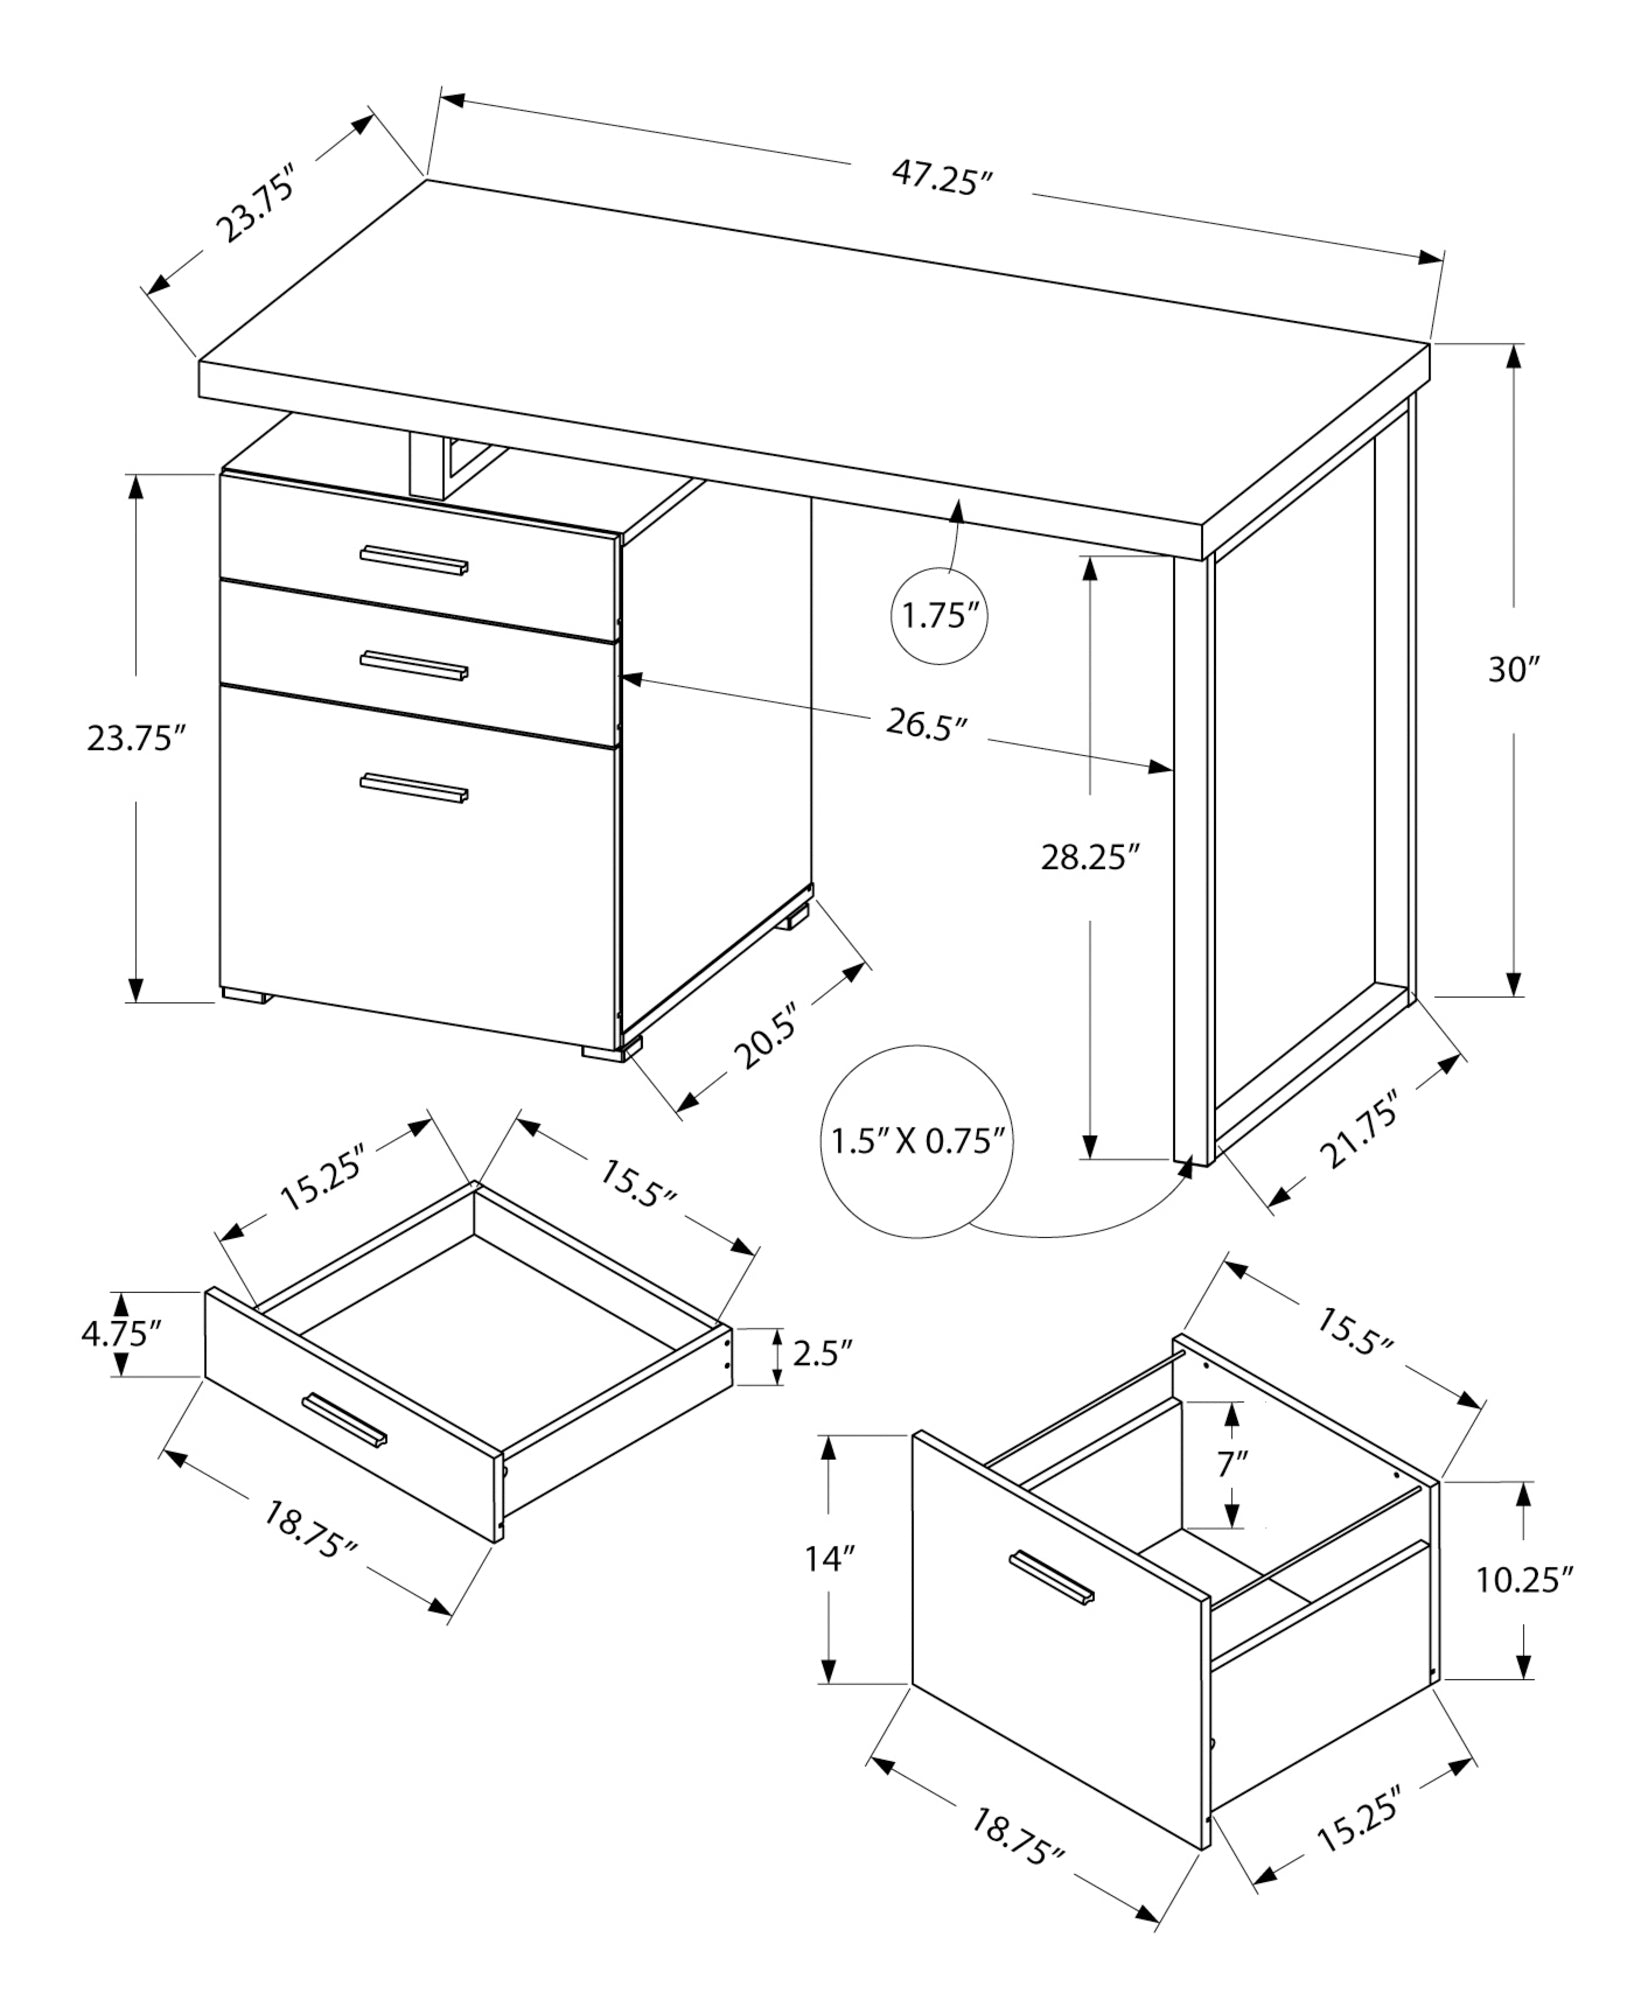 Computer Desk - 48L / Grey Reclaimed Wood / Black Metal